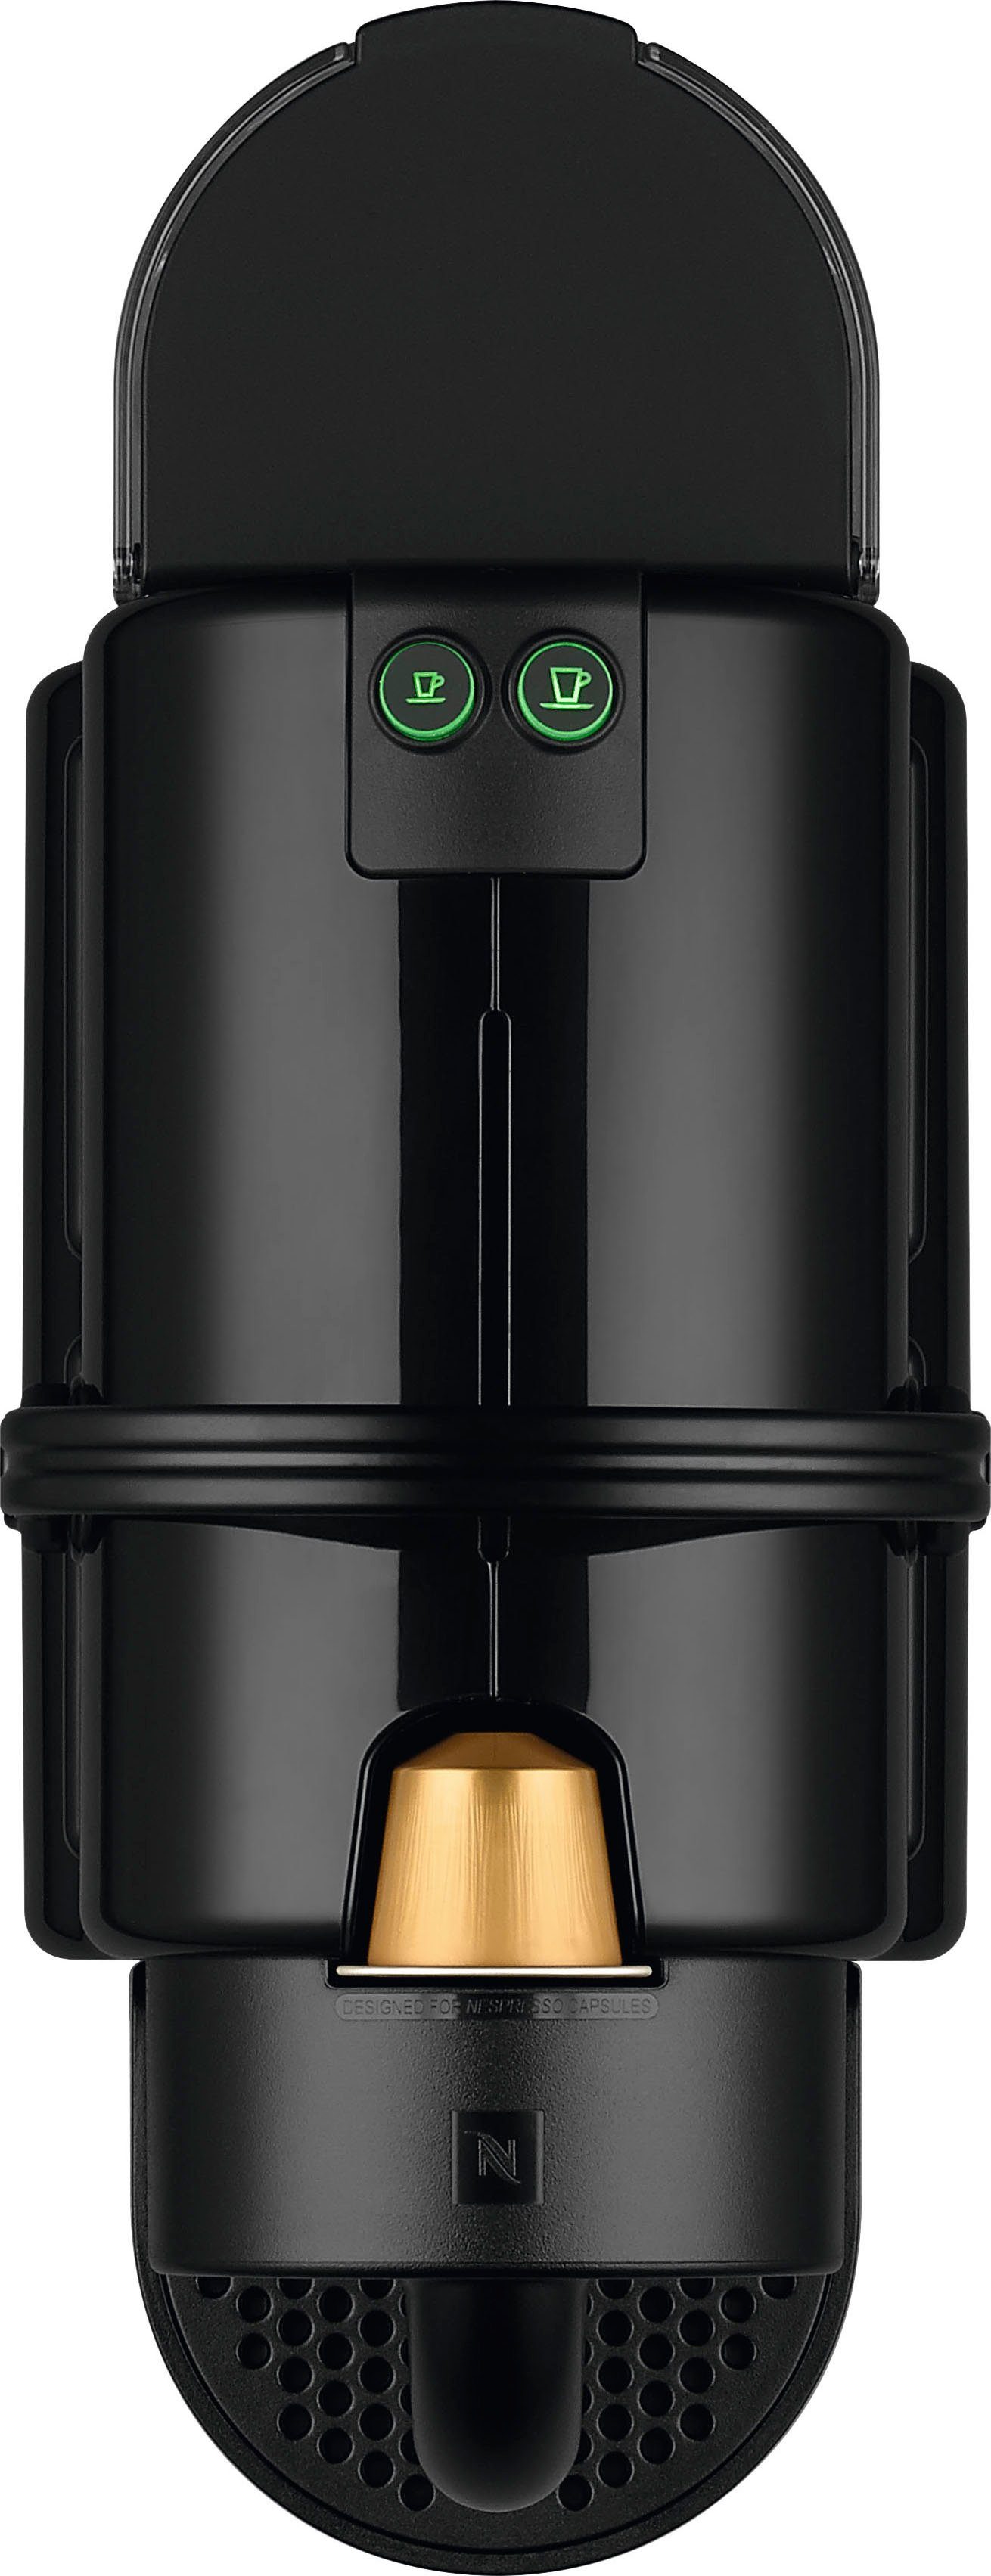 inkl. Kapselmaschine EN Nespresso Inissia Kapseln von Black, 7 Willkommenspaket mit 80.B DeLonghi,